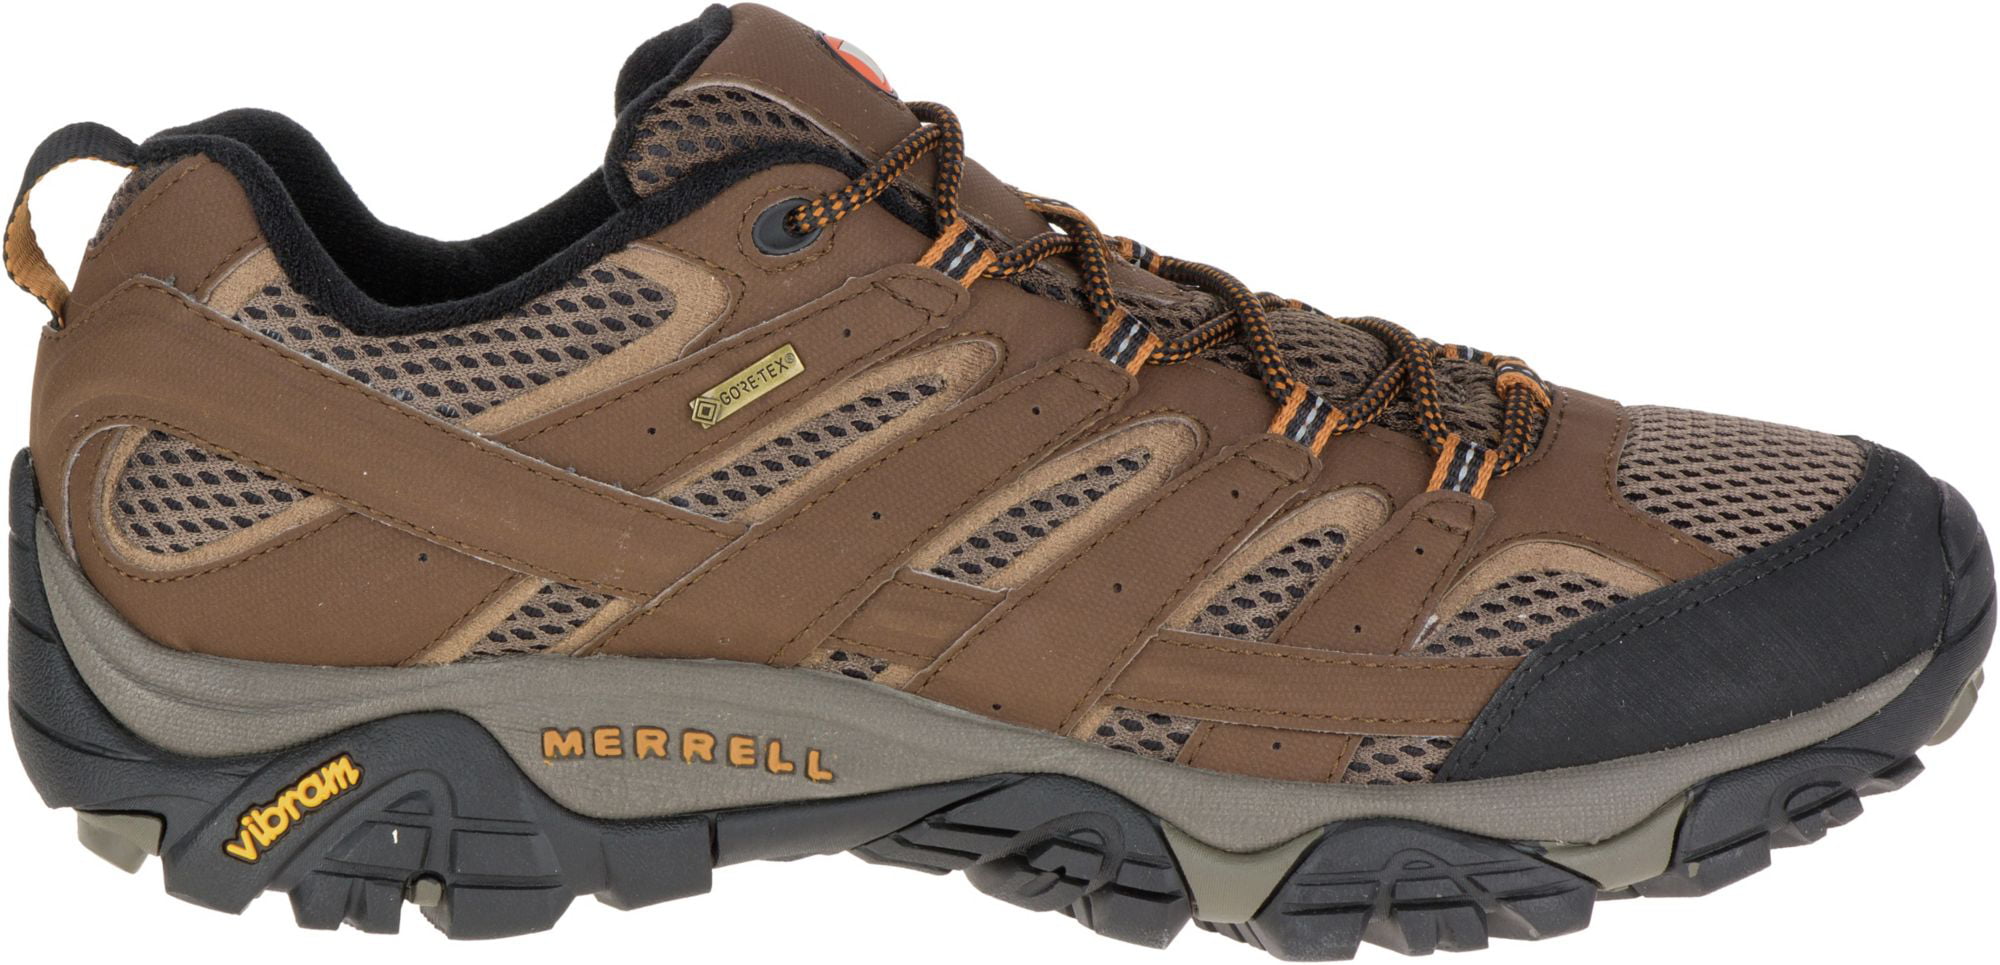 Merrell Men's Moab 2 GTX Hiking Shoe, Earth, 7 D(M) US - Walmart.com